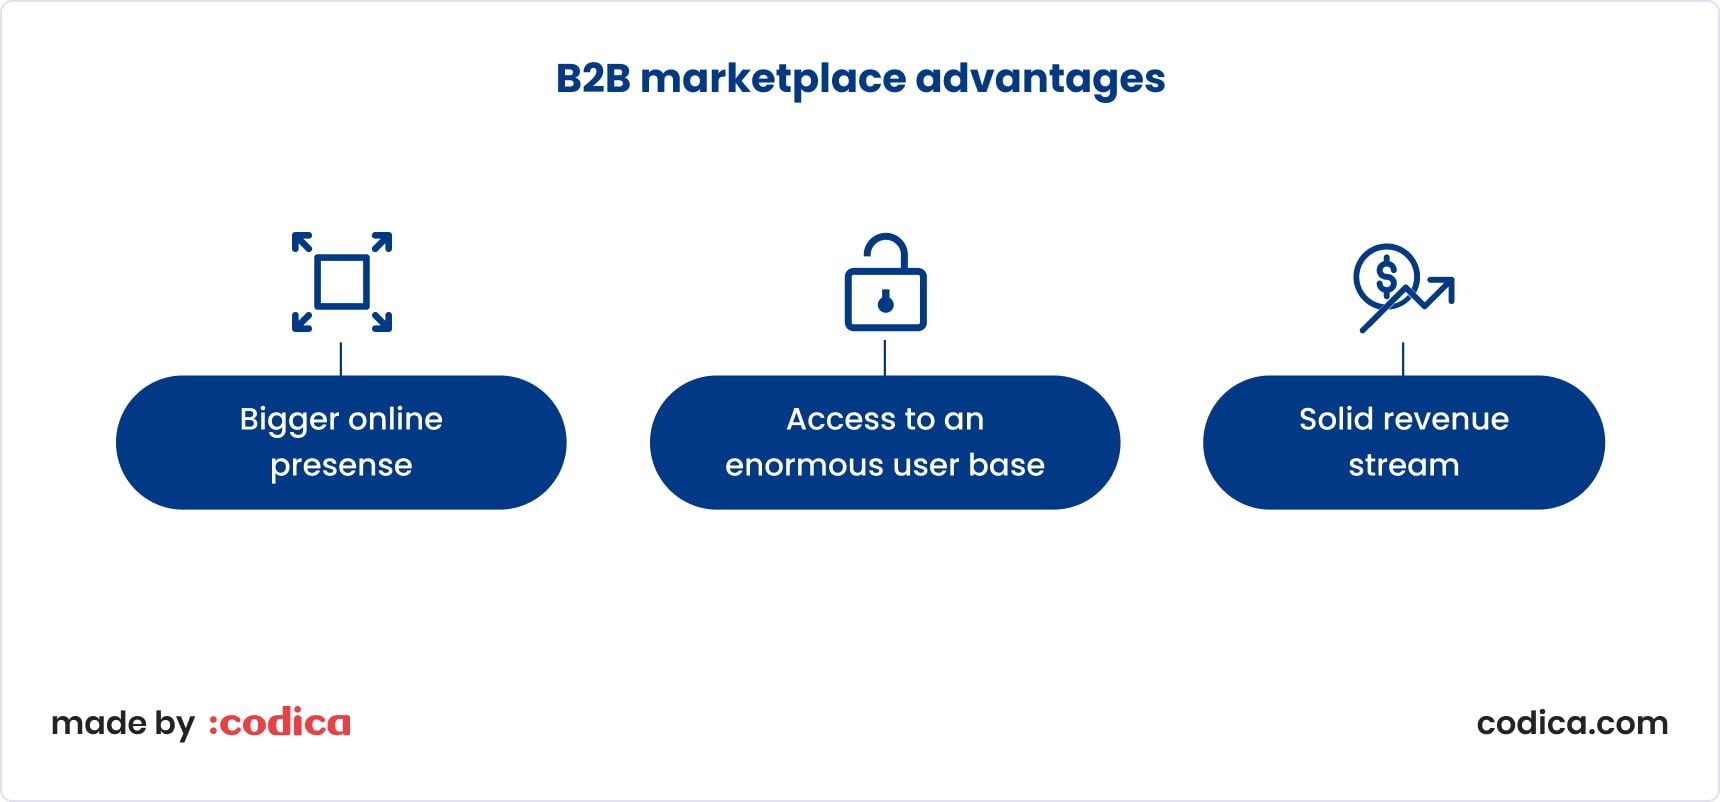 Befetics of B2B marketplace